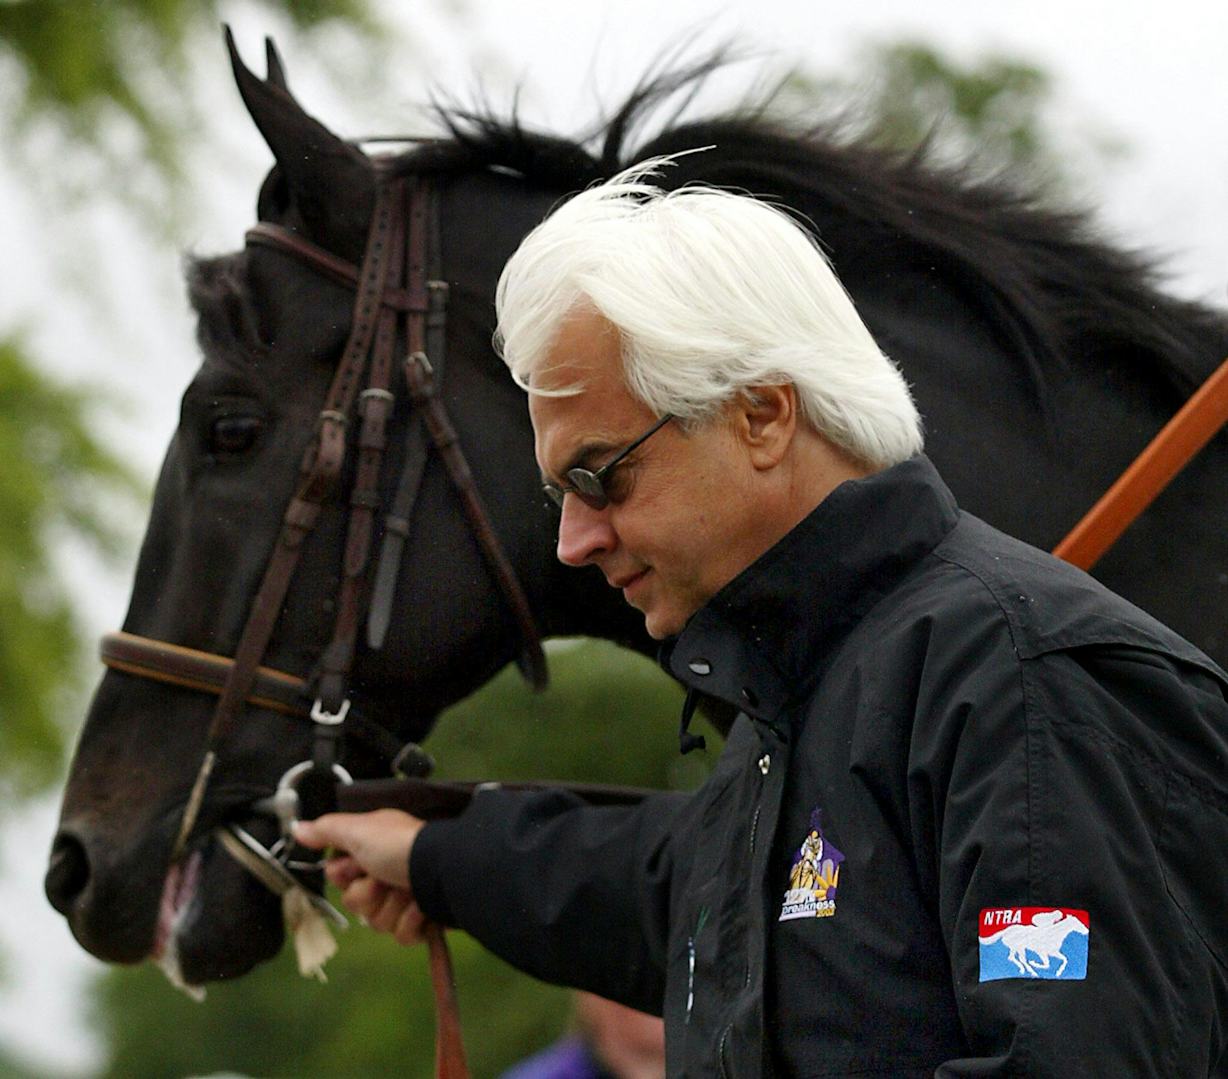 Who Is Bob Baffert? The Horse Trainer Has Seen Several Kentucky Derby